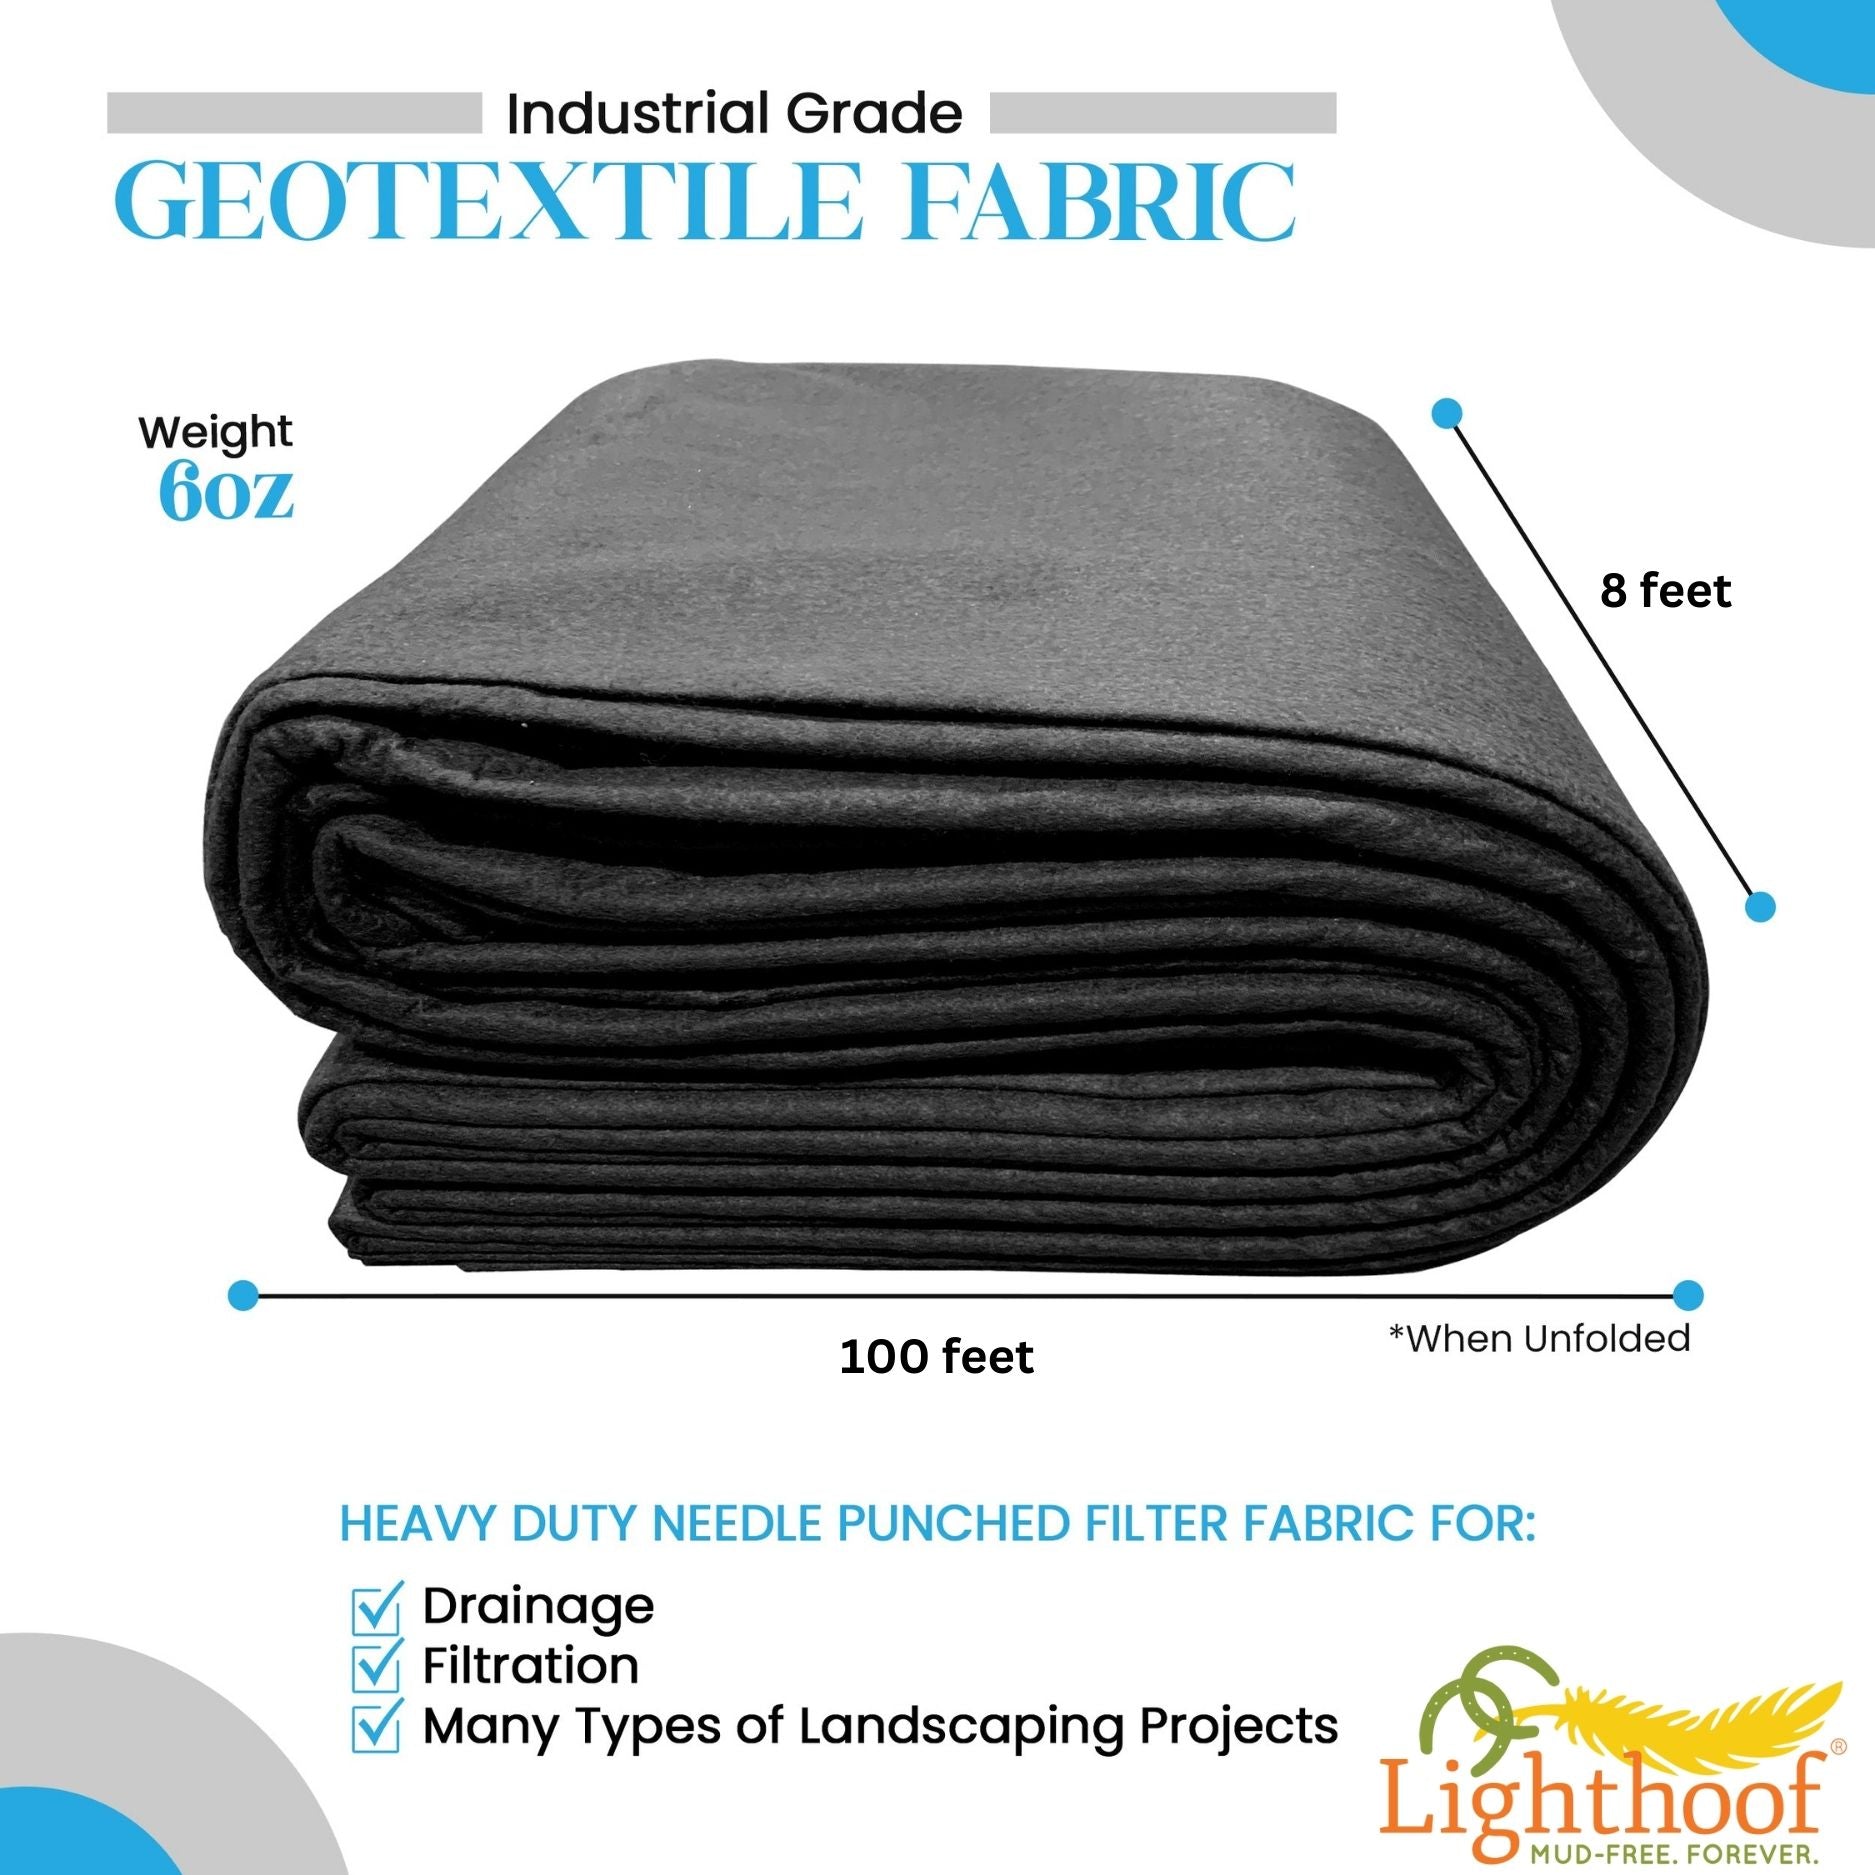 Bundle of 10 Lighthoof Panels and Geotextile Fabric